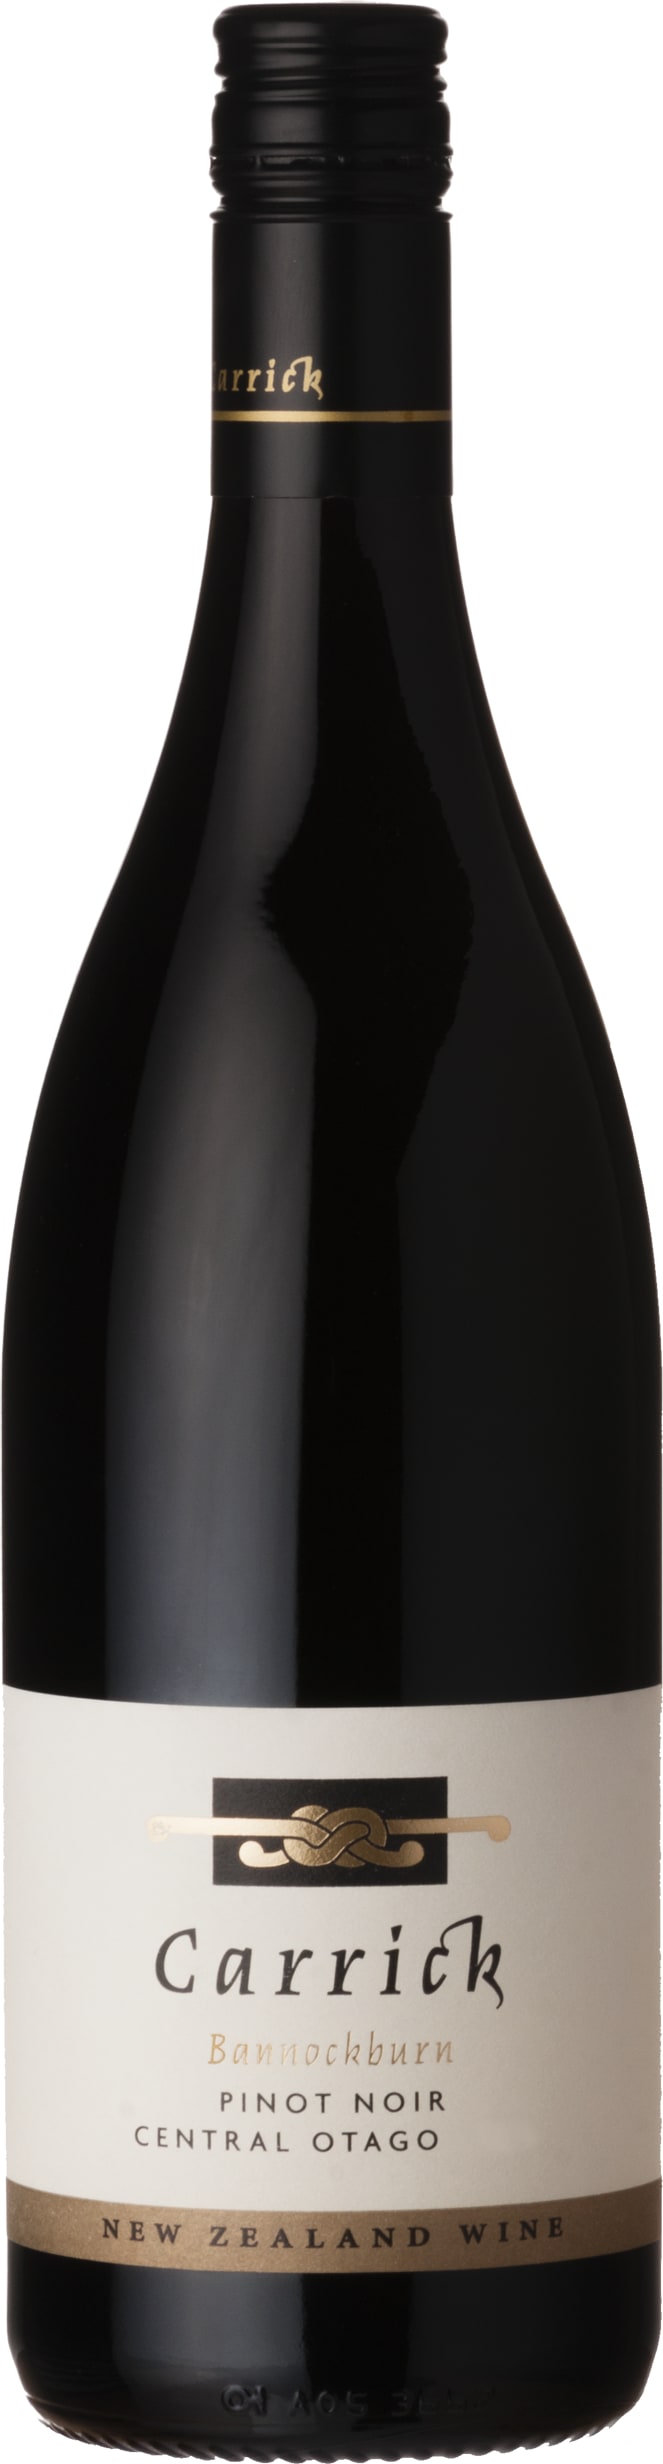 Carrick Winery Bannockburn Pinot Noir 2018 75cl - Buy Carrick Winery Wines from GREAT WINES DIRECT wine shop